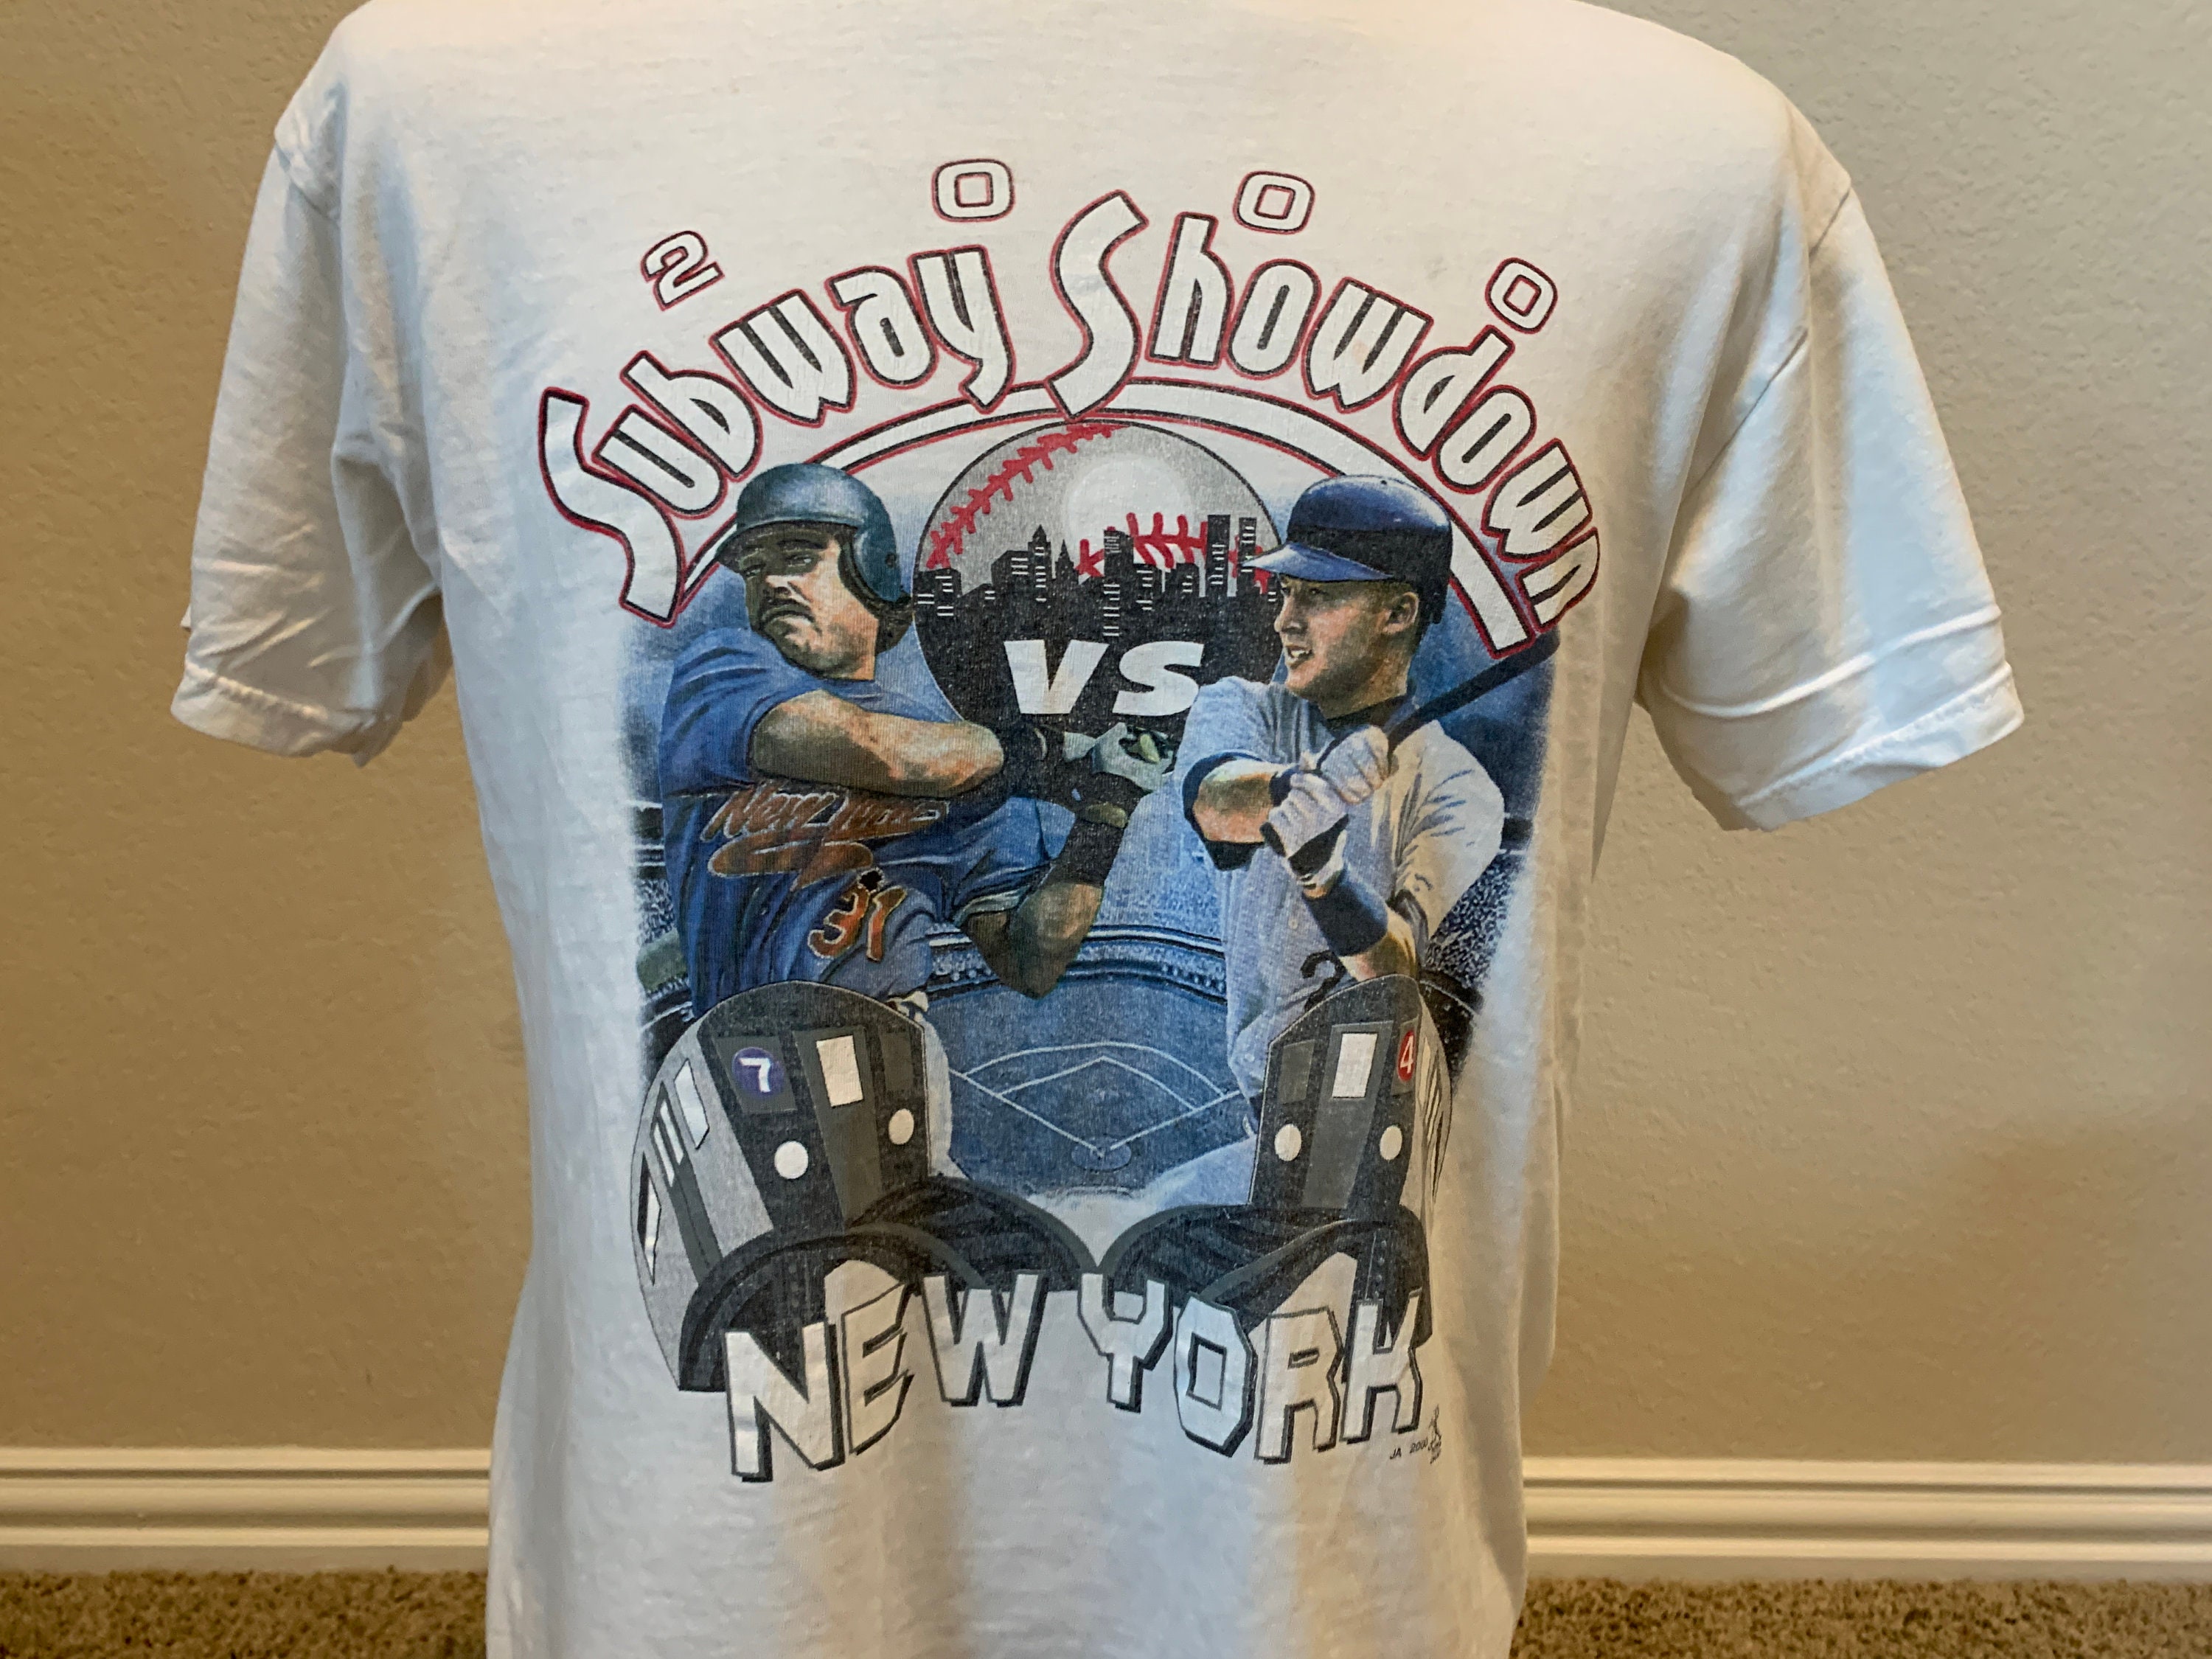 Mens THURMAN MUNSON Yankees Baseball Card Short-Sleeve Tee Shirt T-Shirt